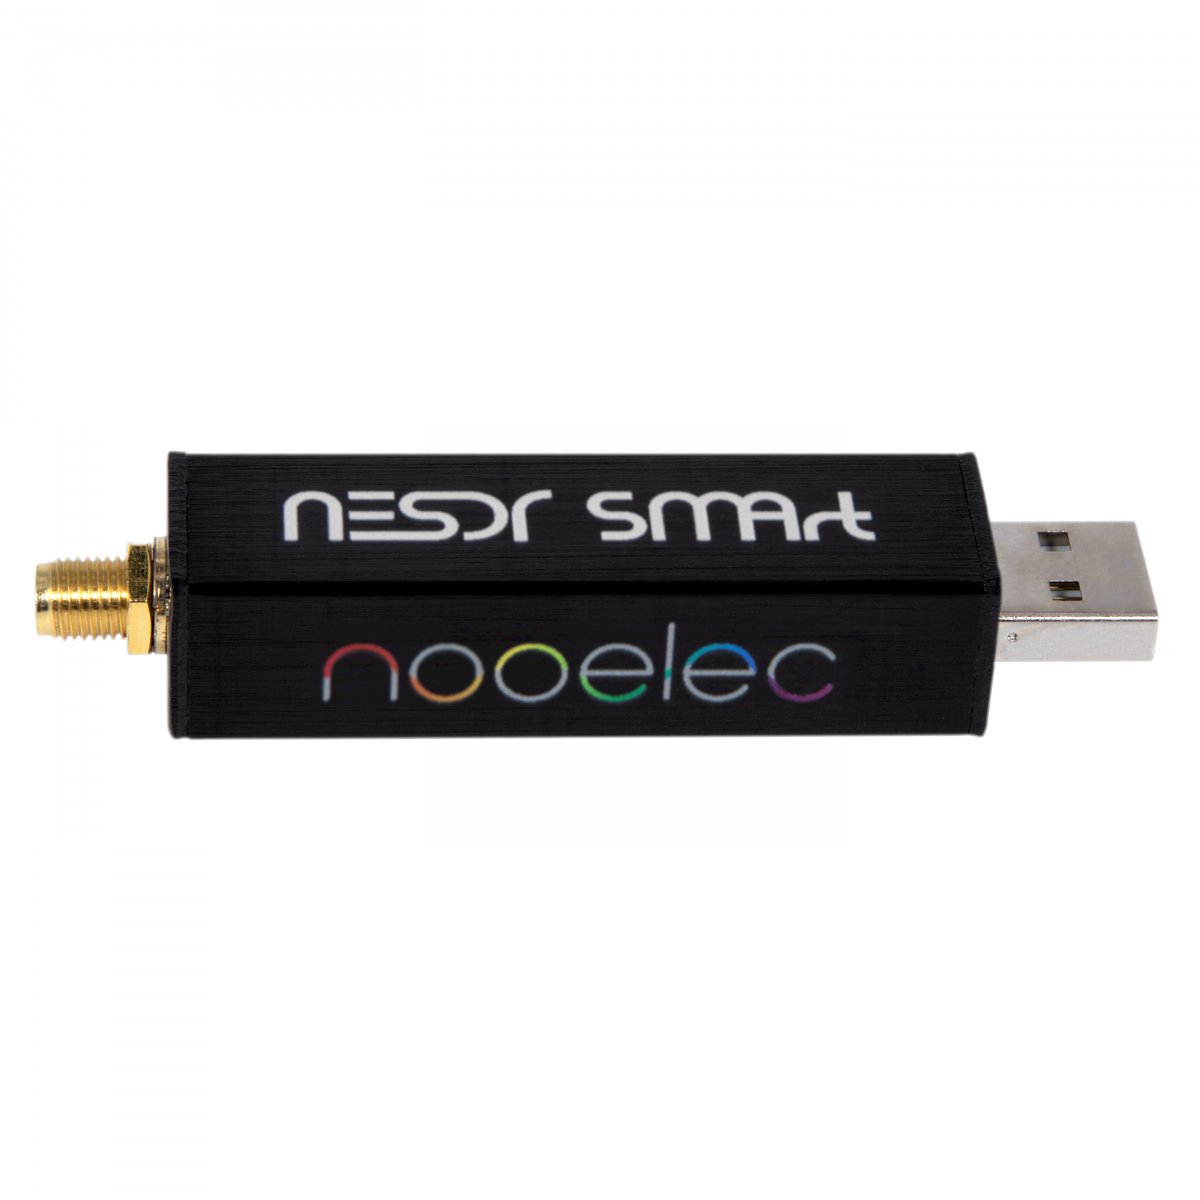 Nooelec Nesdr Smart Xtr Bundle - Rtl-sdr Premium Con Rango E